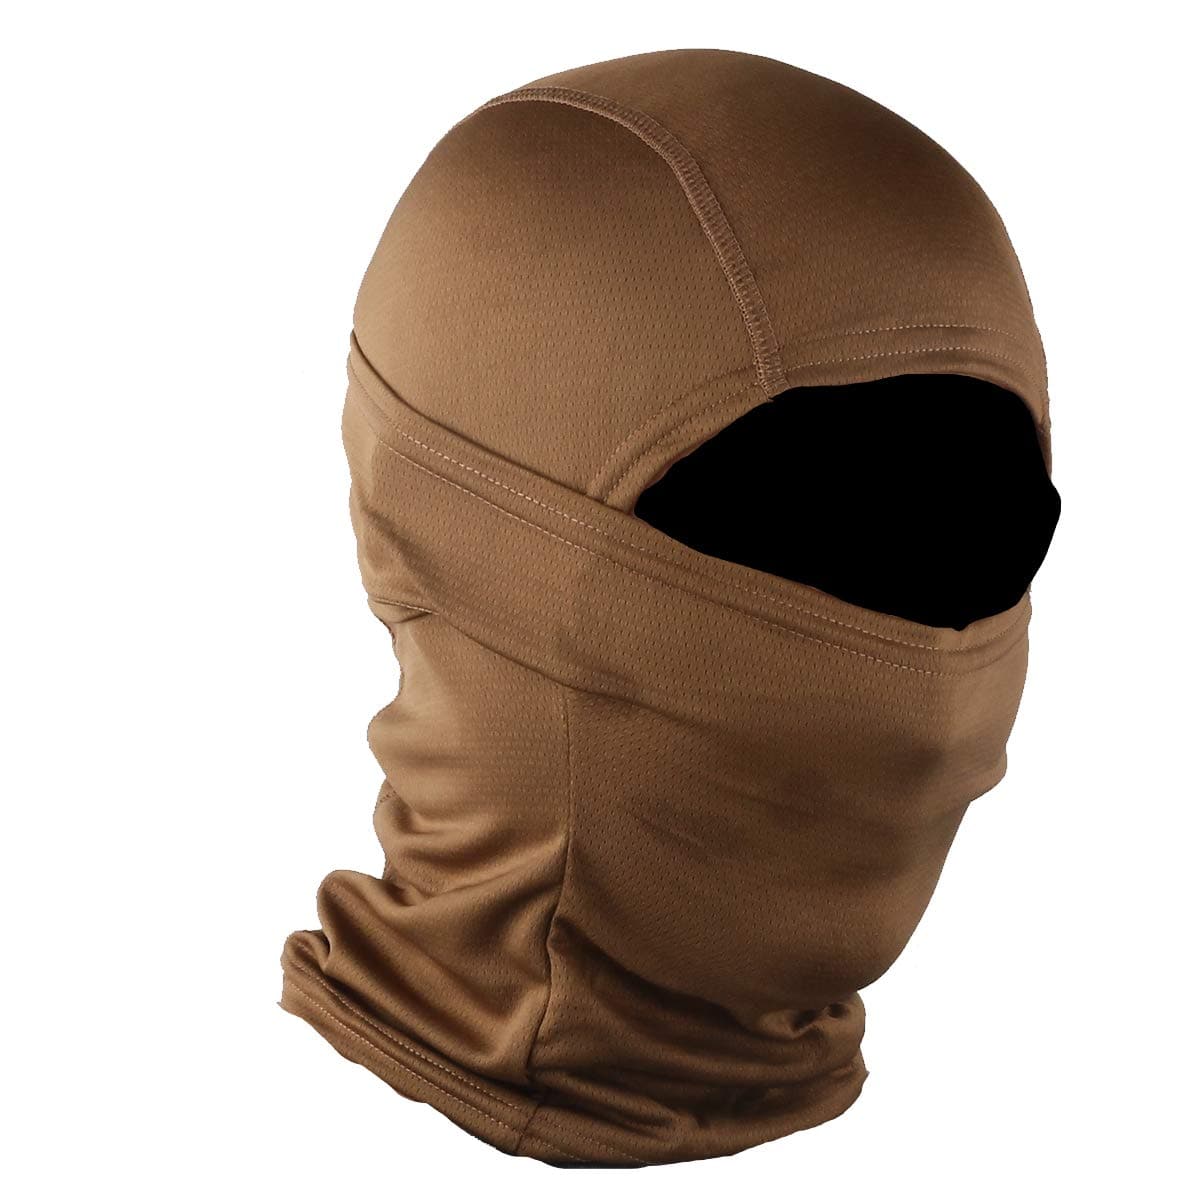 Breathable Tactical Ride Balaclava UV Protection Face Mask